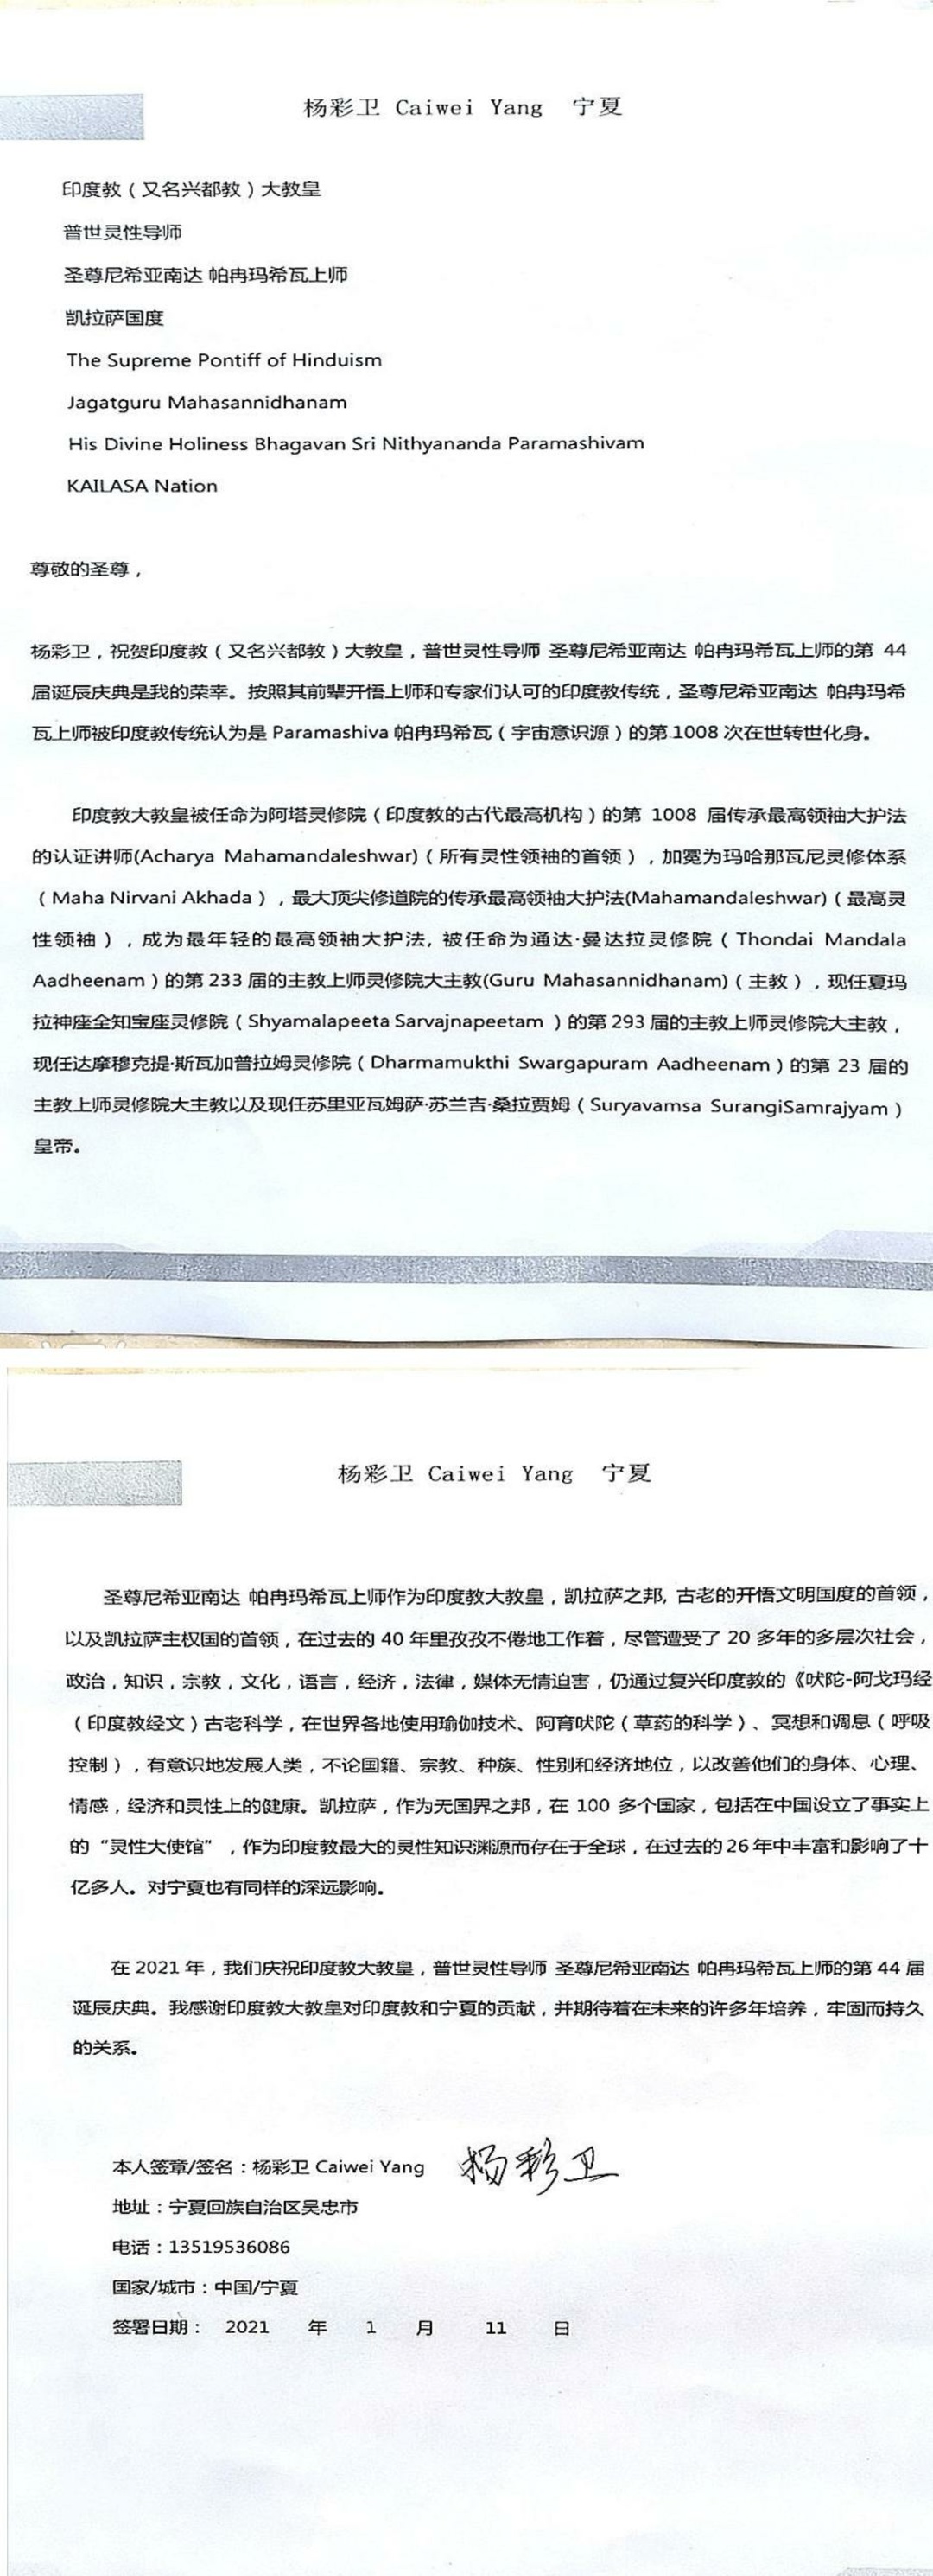 China---Caiwei-Yang---January-11--2021-(Proclamation)-1TbDCsH2iXja8cZyojnm9gRNFkmRJafOO.pdf